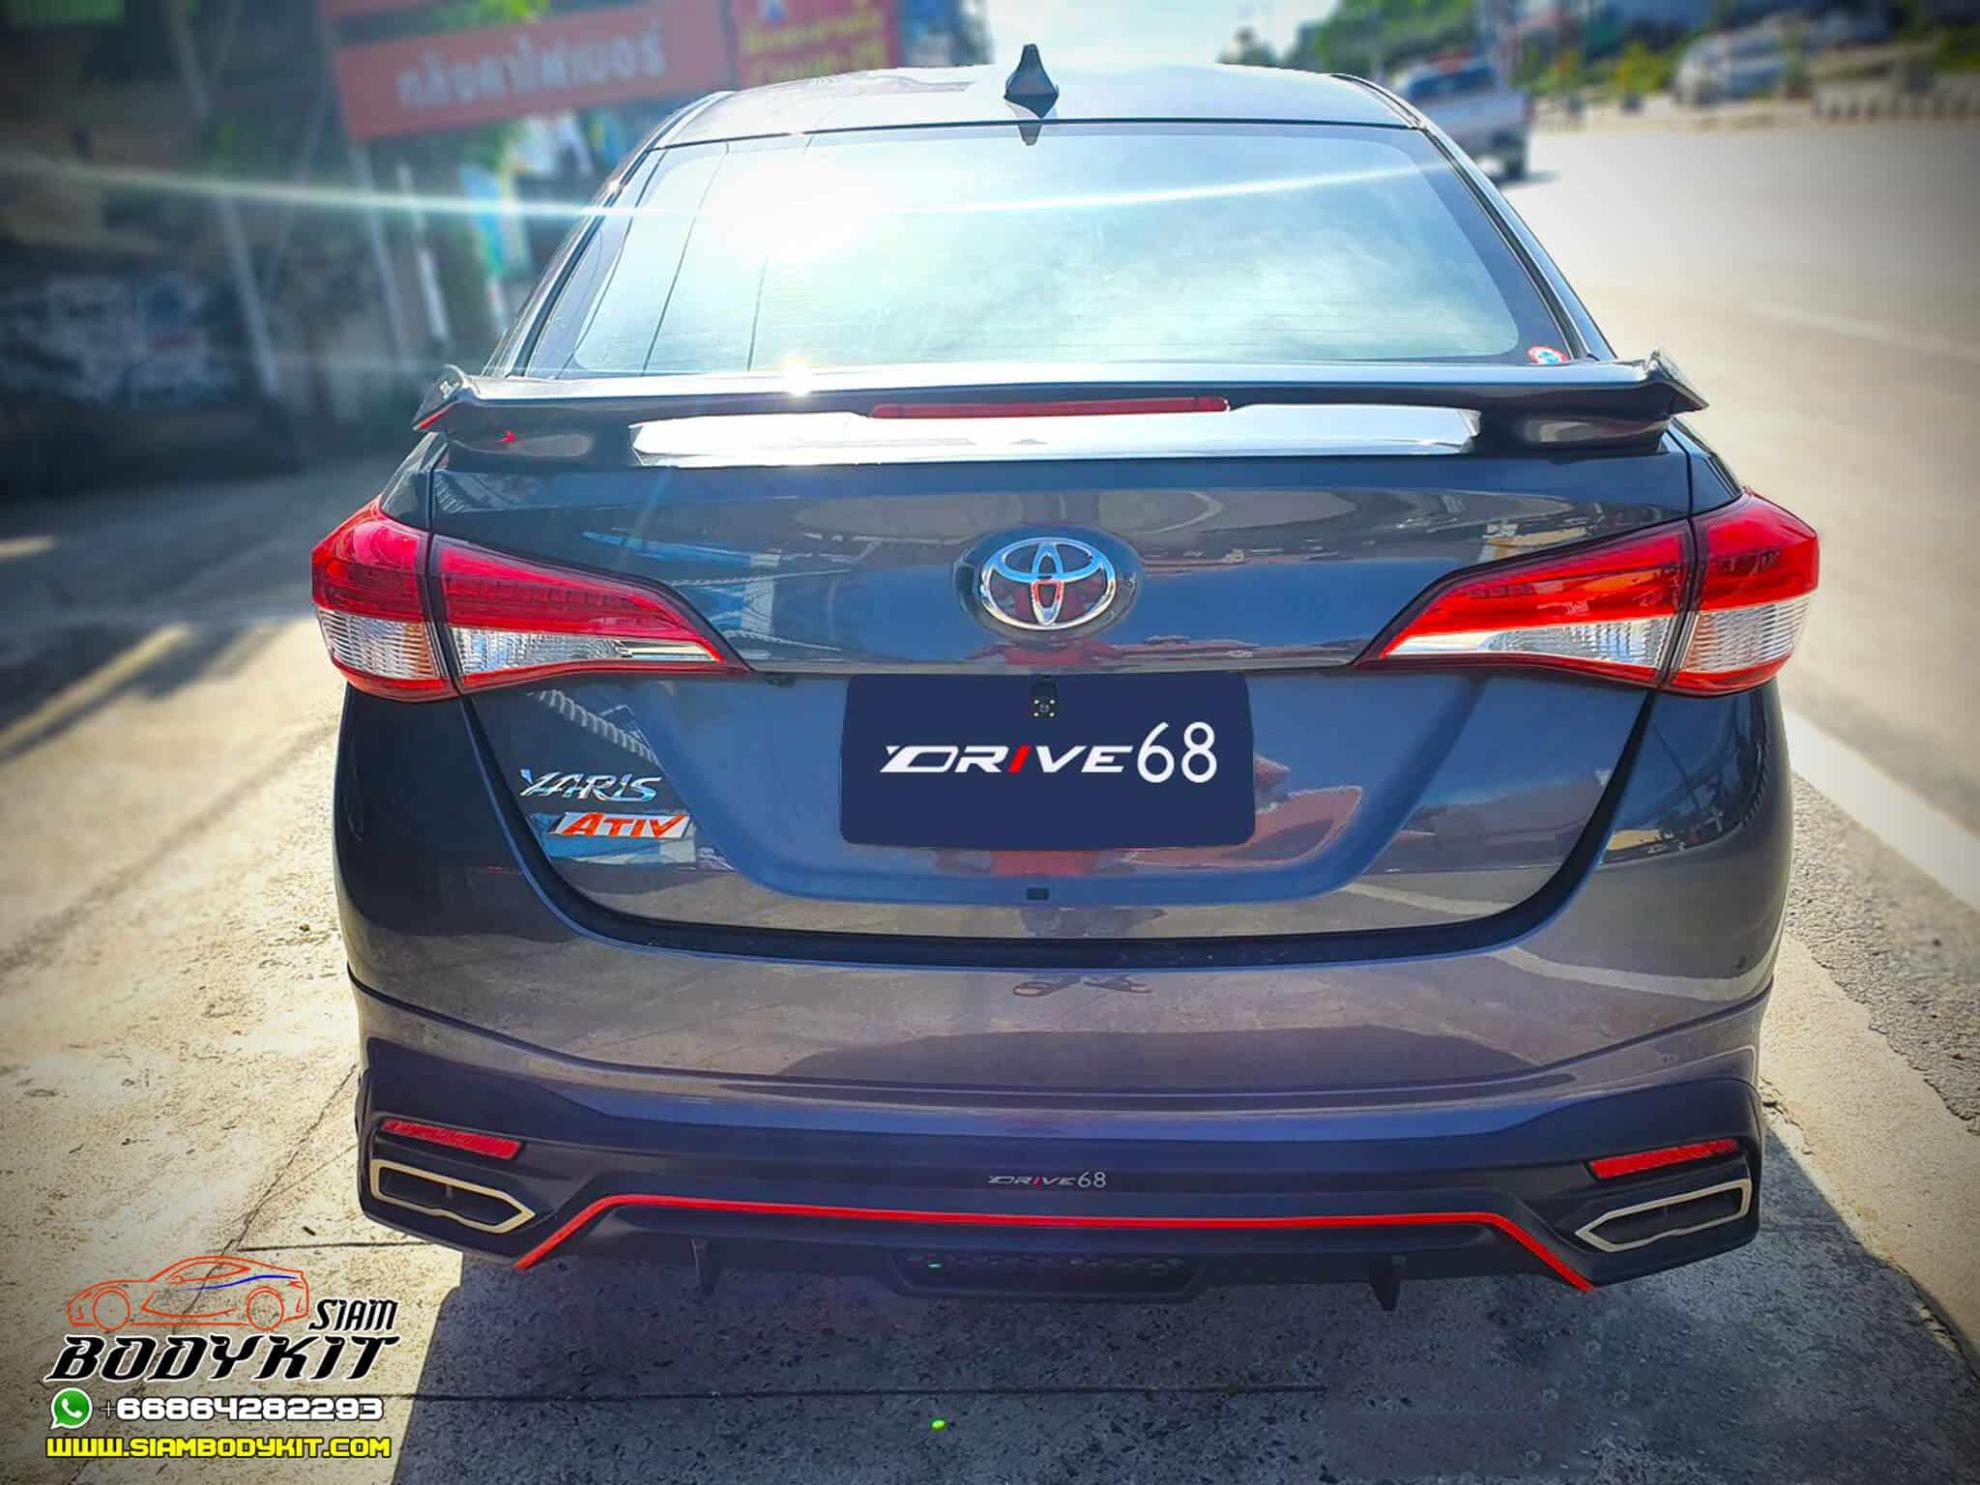 Drive68 + LED Spoiler Bodykit for Toyota Yaris Ativ 2020 (COLOR)